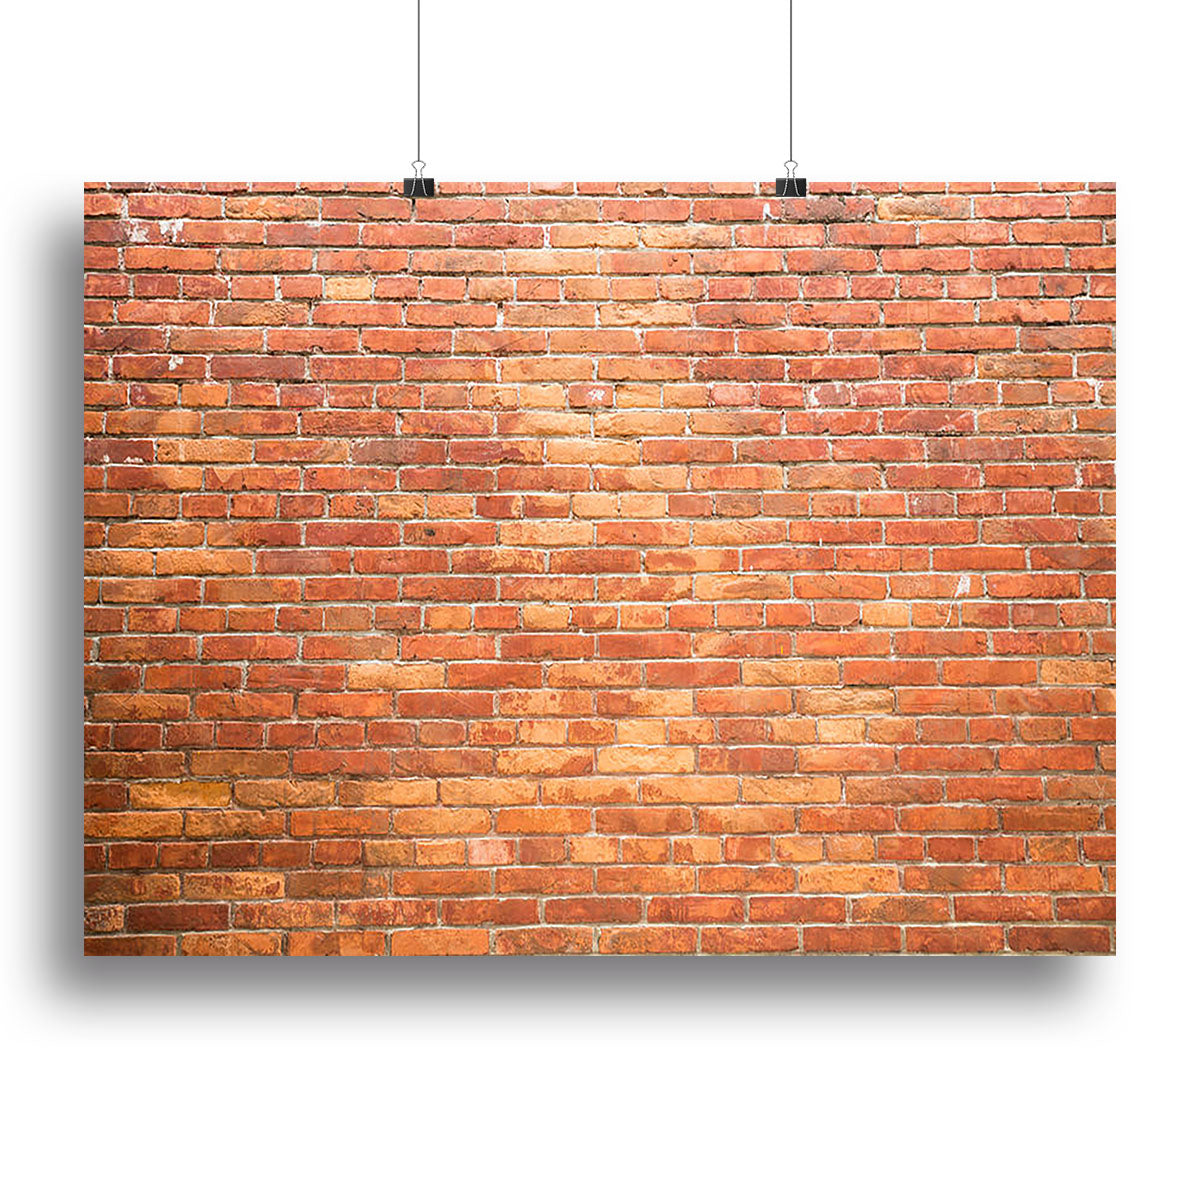 Bricks wall Canvas Print or Poster - Canvas Art Rocks - 2